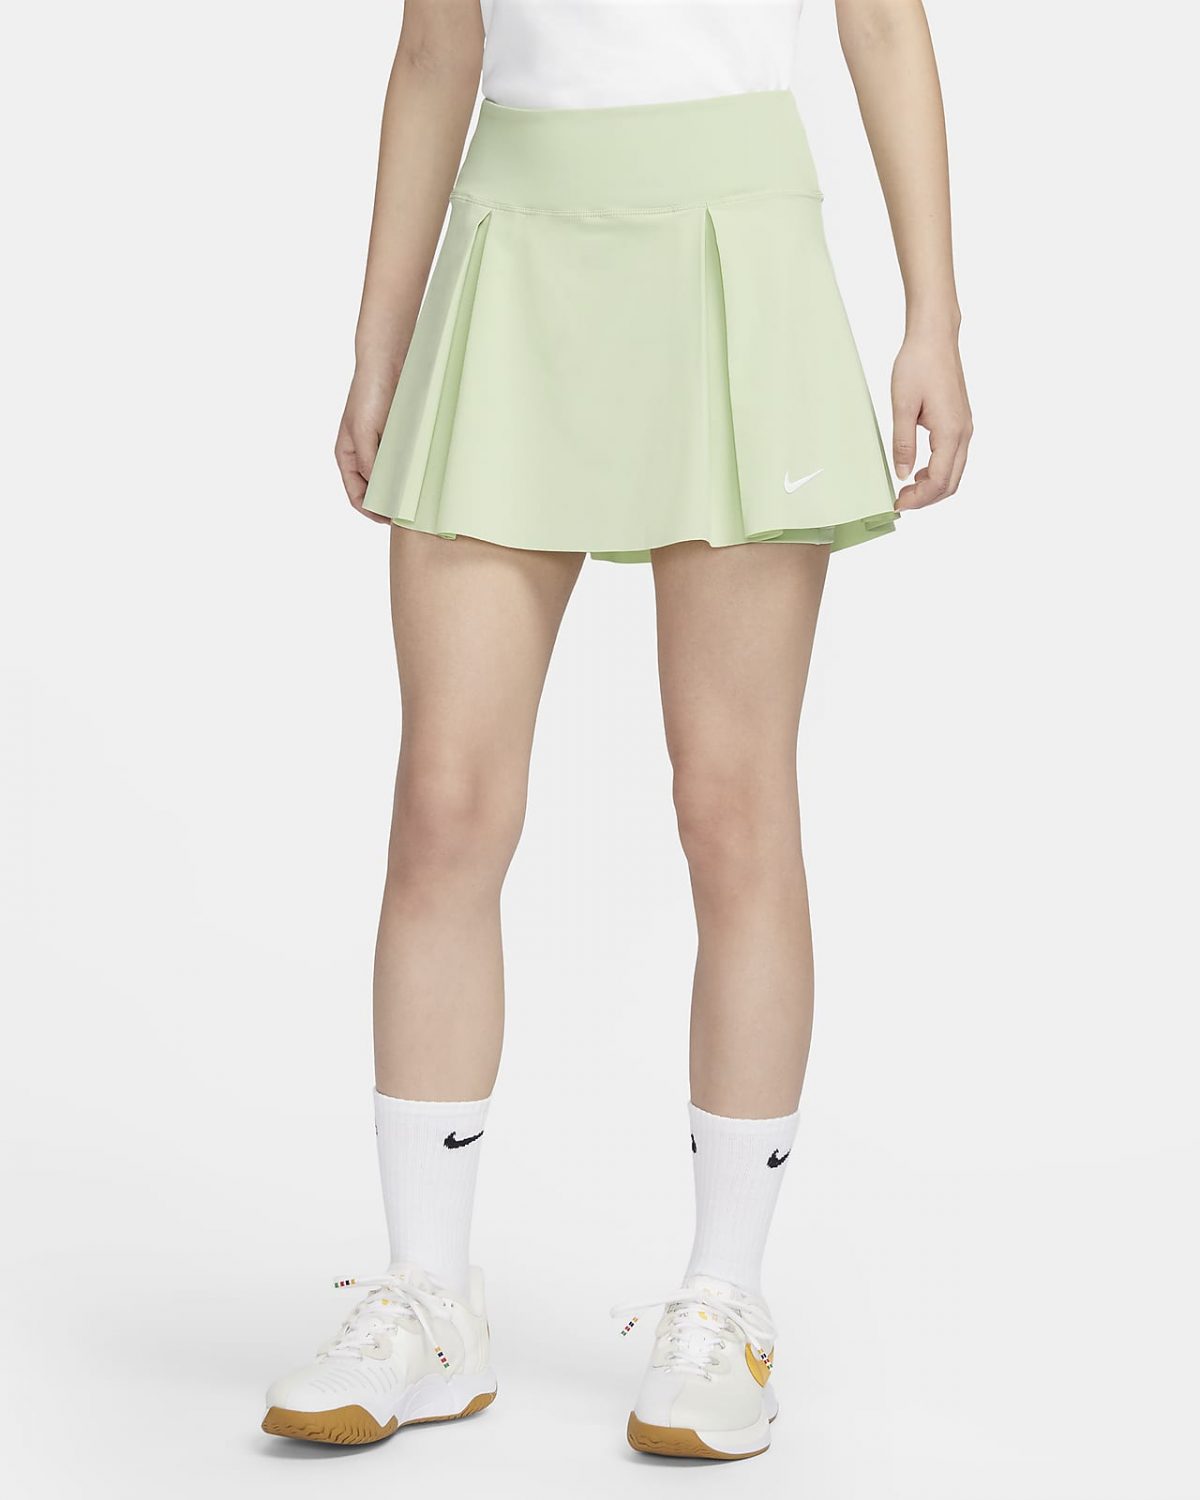 Женская юбка Nike Dri-FIT Advantage фото